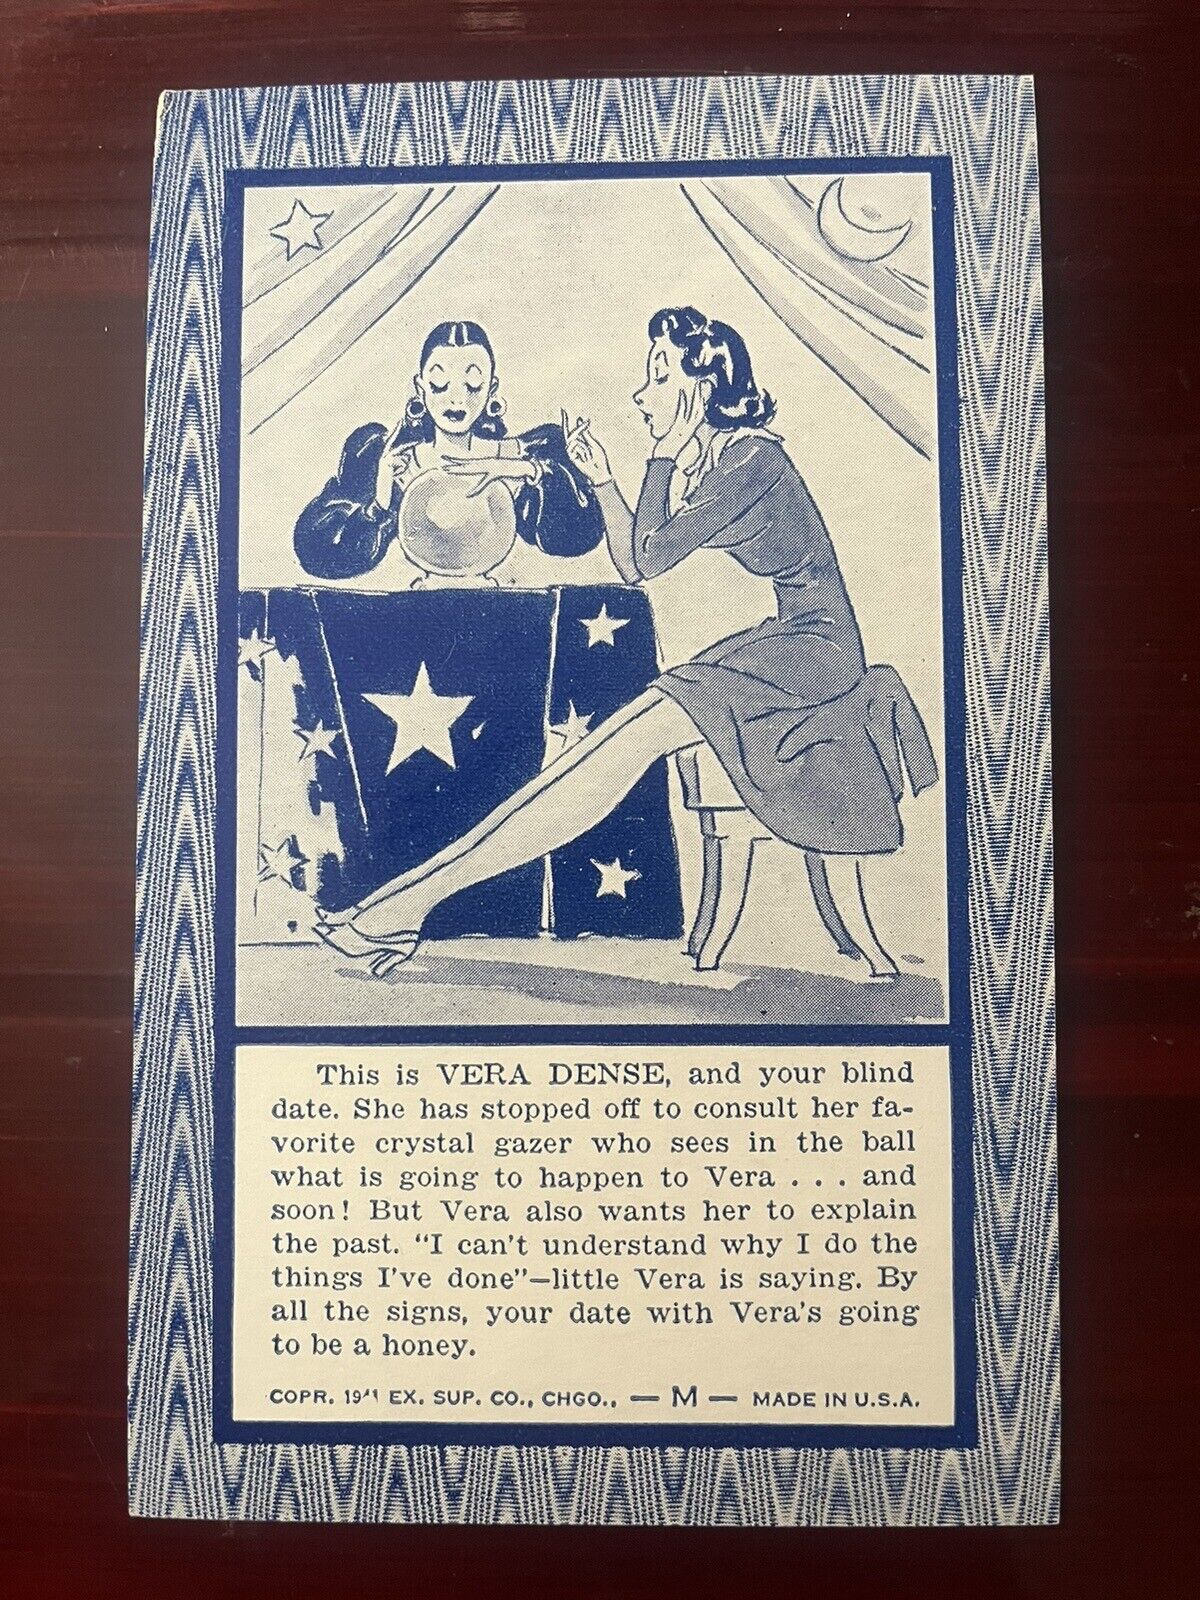 1941 Blind Date Fortune Teller Arcade Machine Prize Card ~ Vera Dense